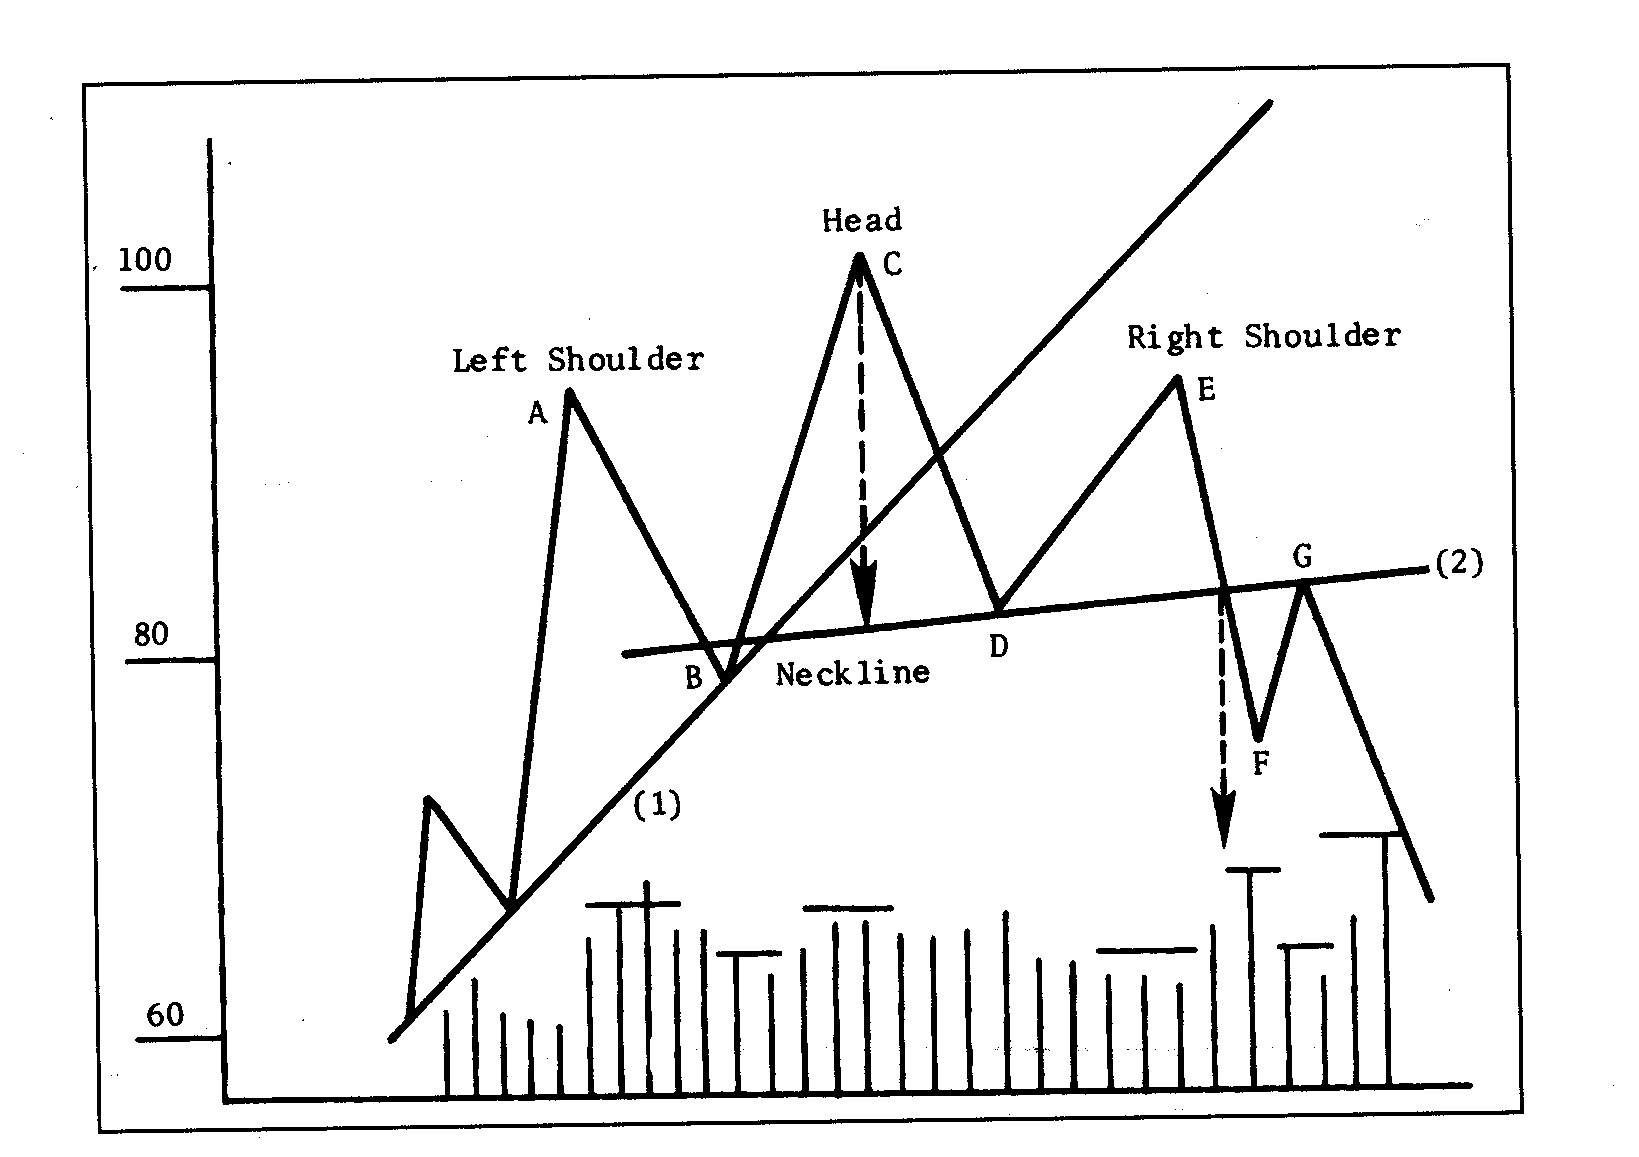 [Classic head-and-shoulders chart]